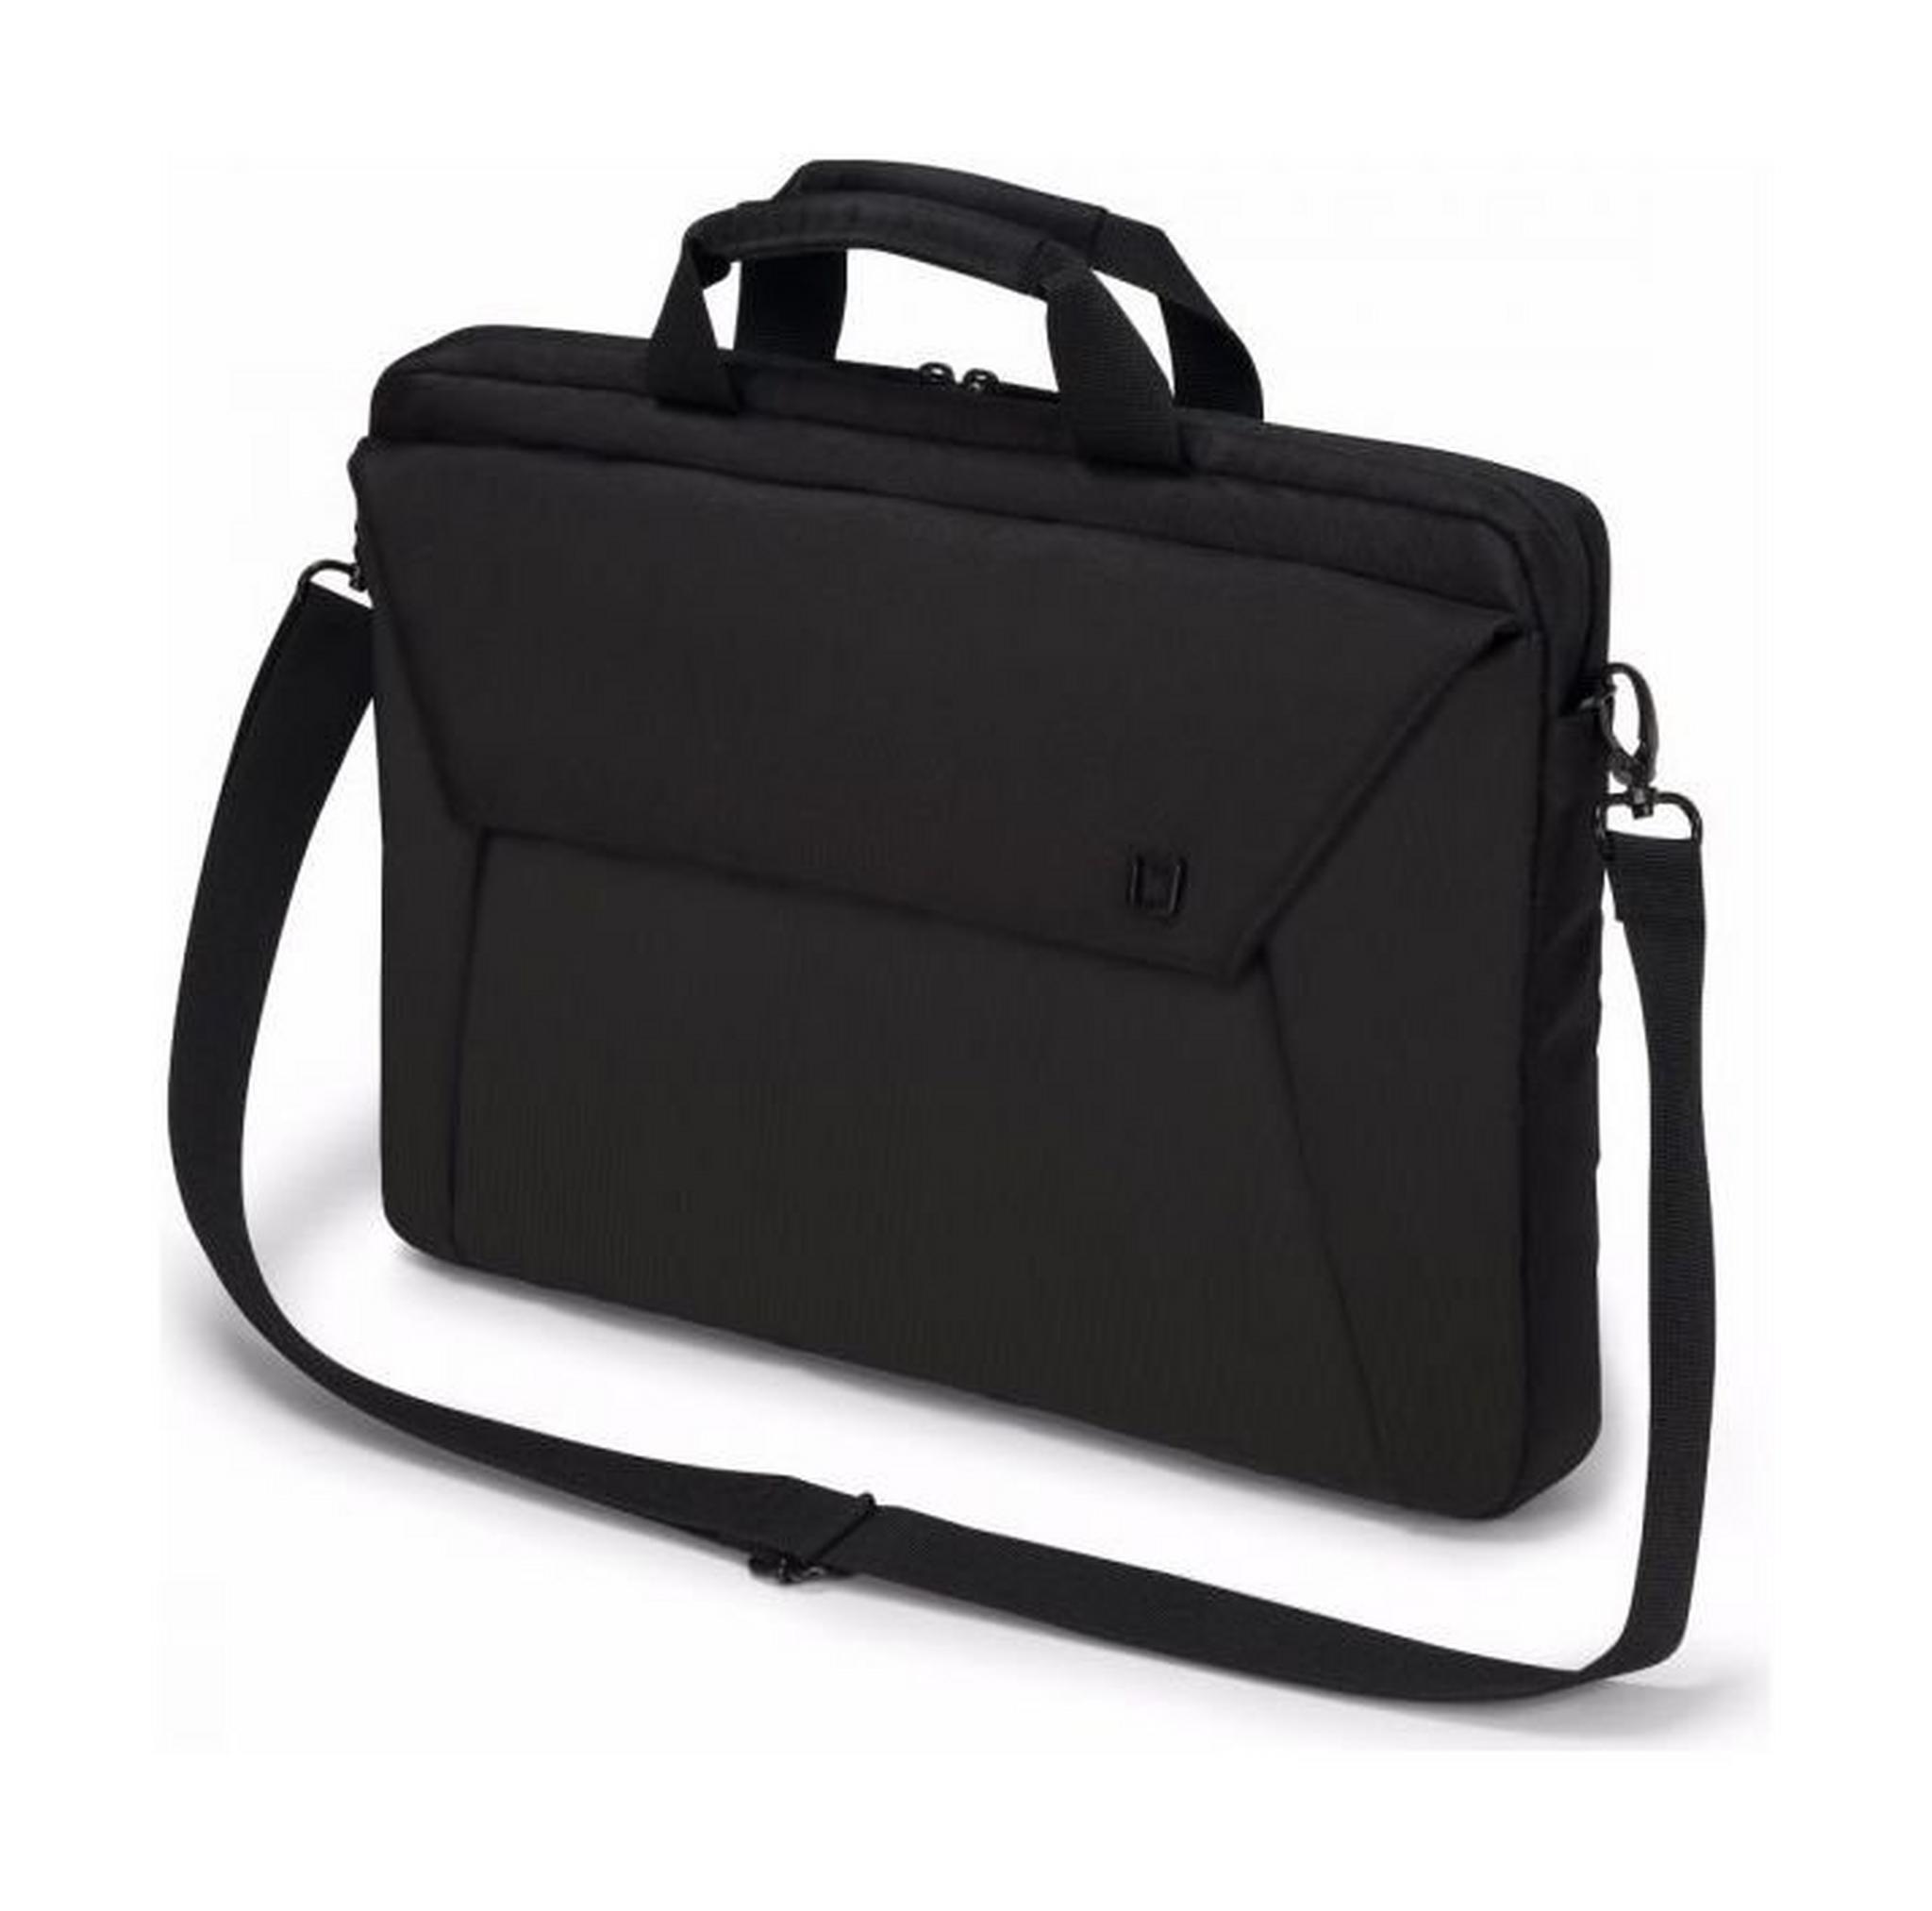 Dicota Slim Case Edge Laptop Case for 12-13.3 inch Laptop - Black